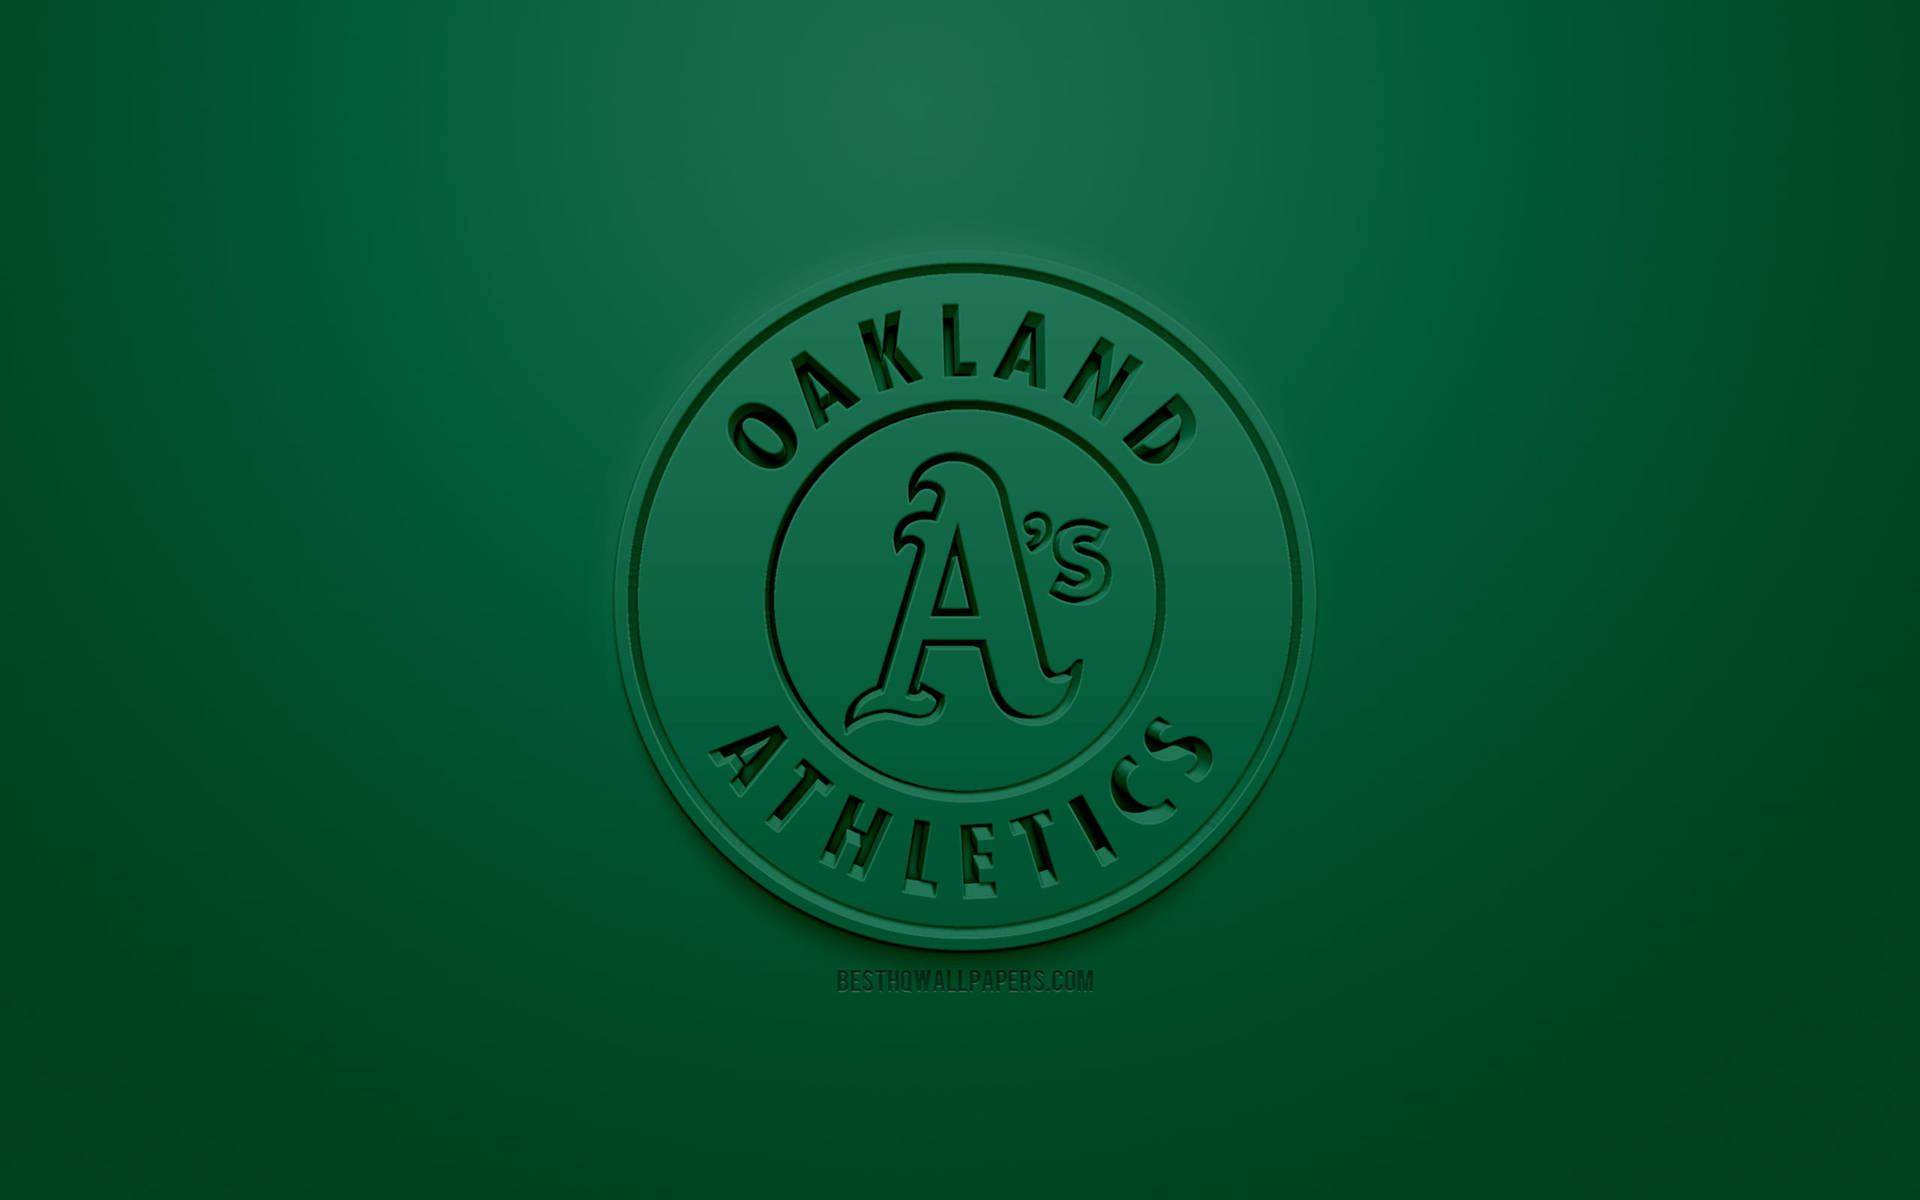 Oakland Athletics Green Monochrome Background